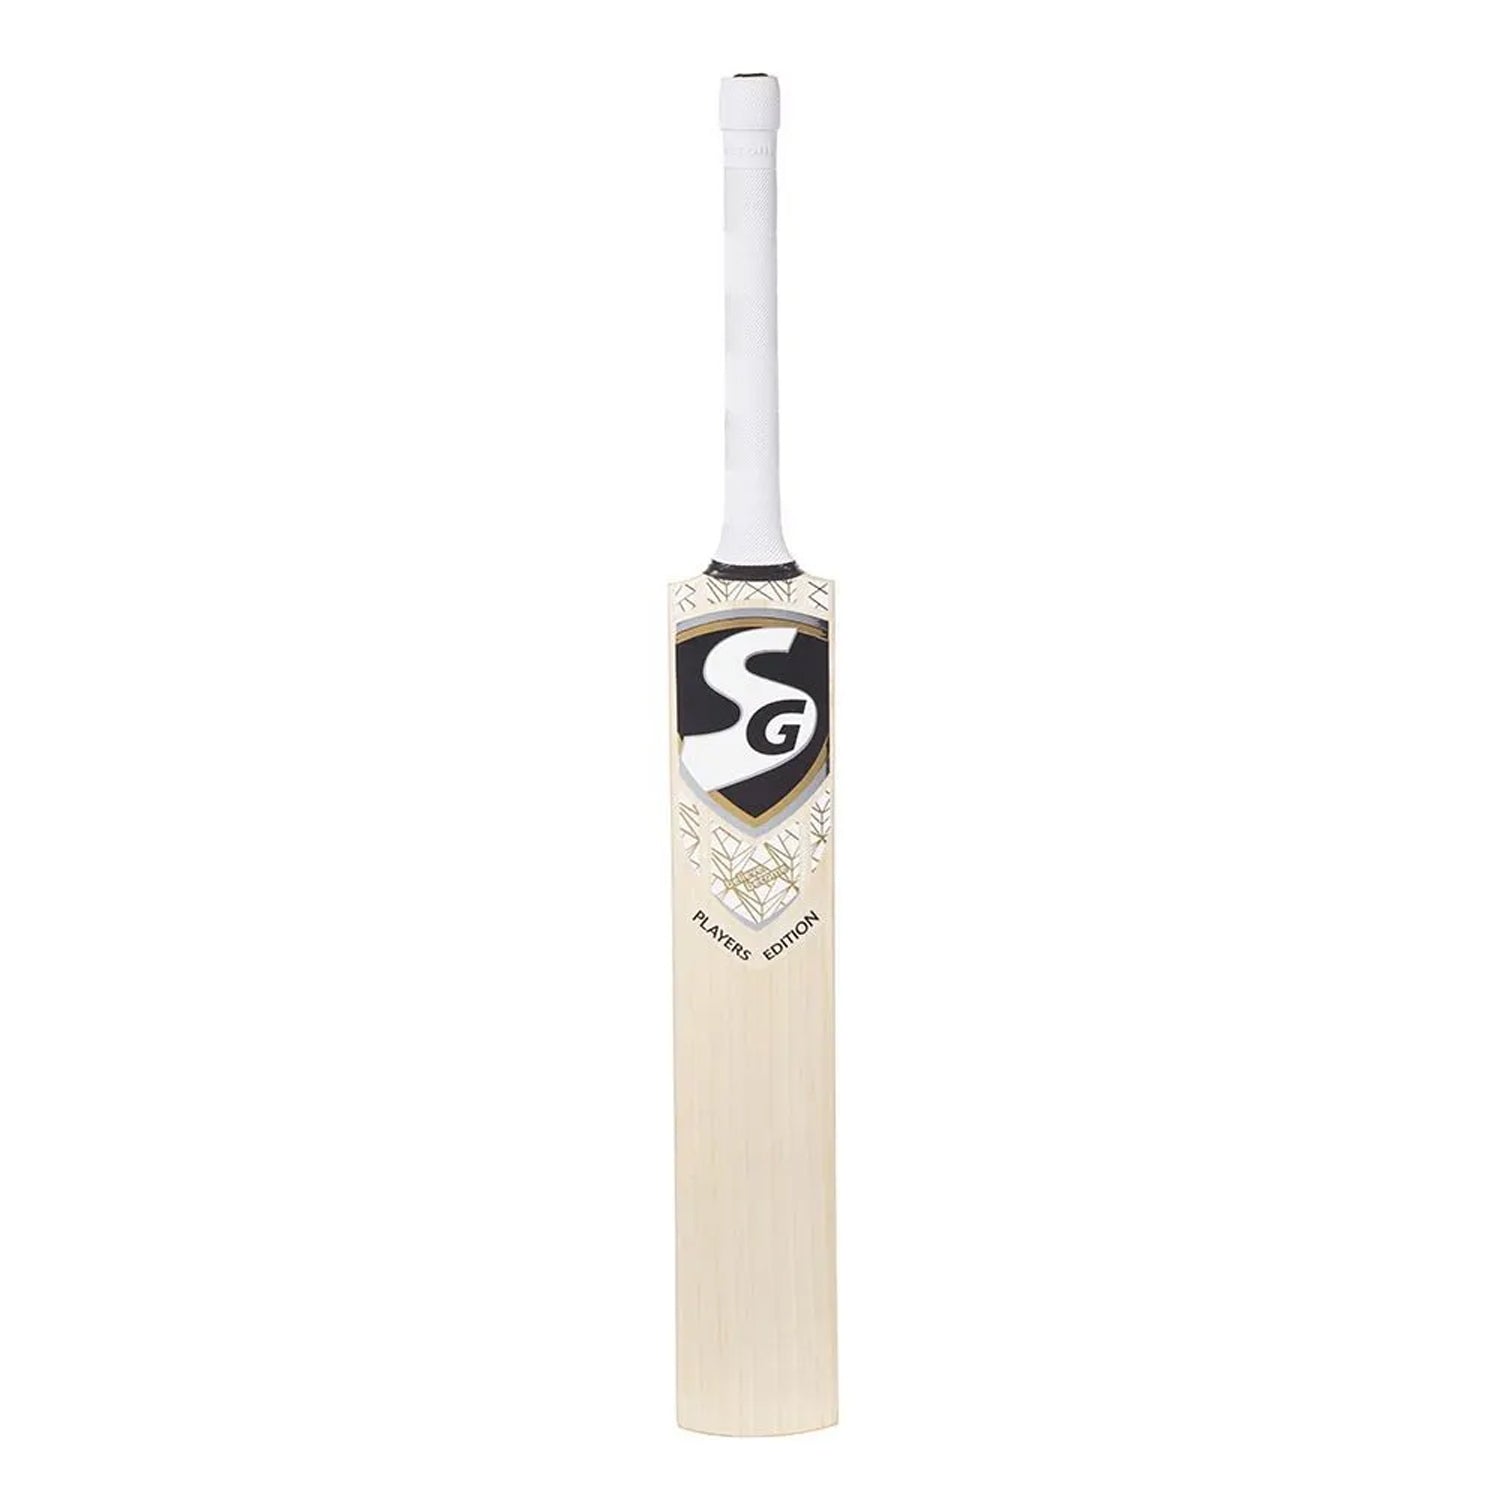 SG Players Edition English Willow Cricket Bat - Best Price online Prokicksports.com